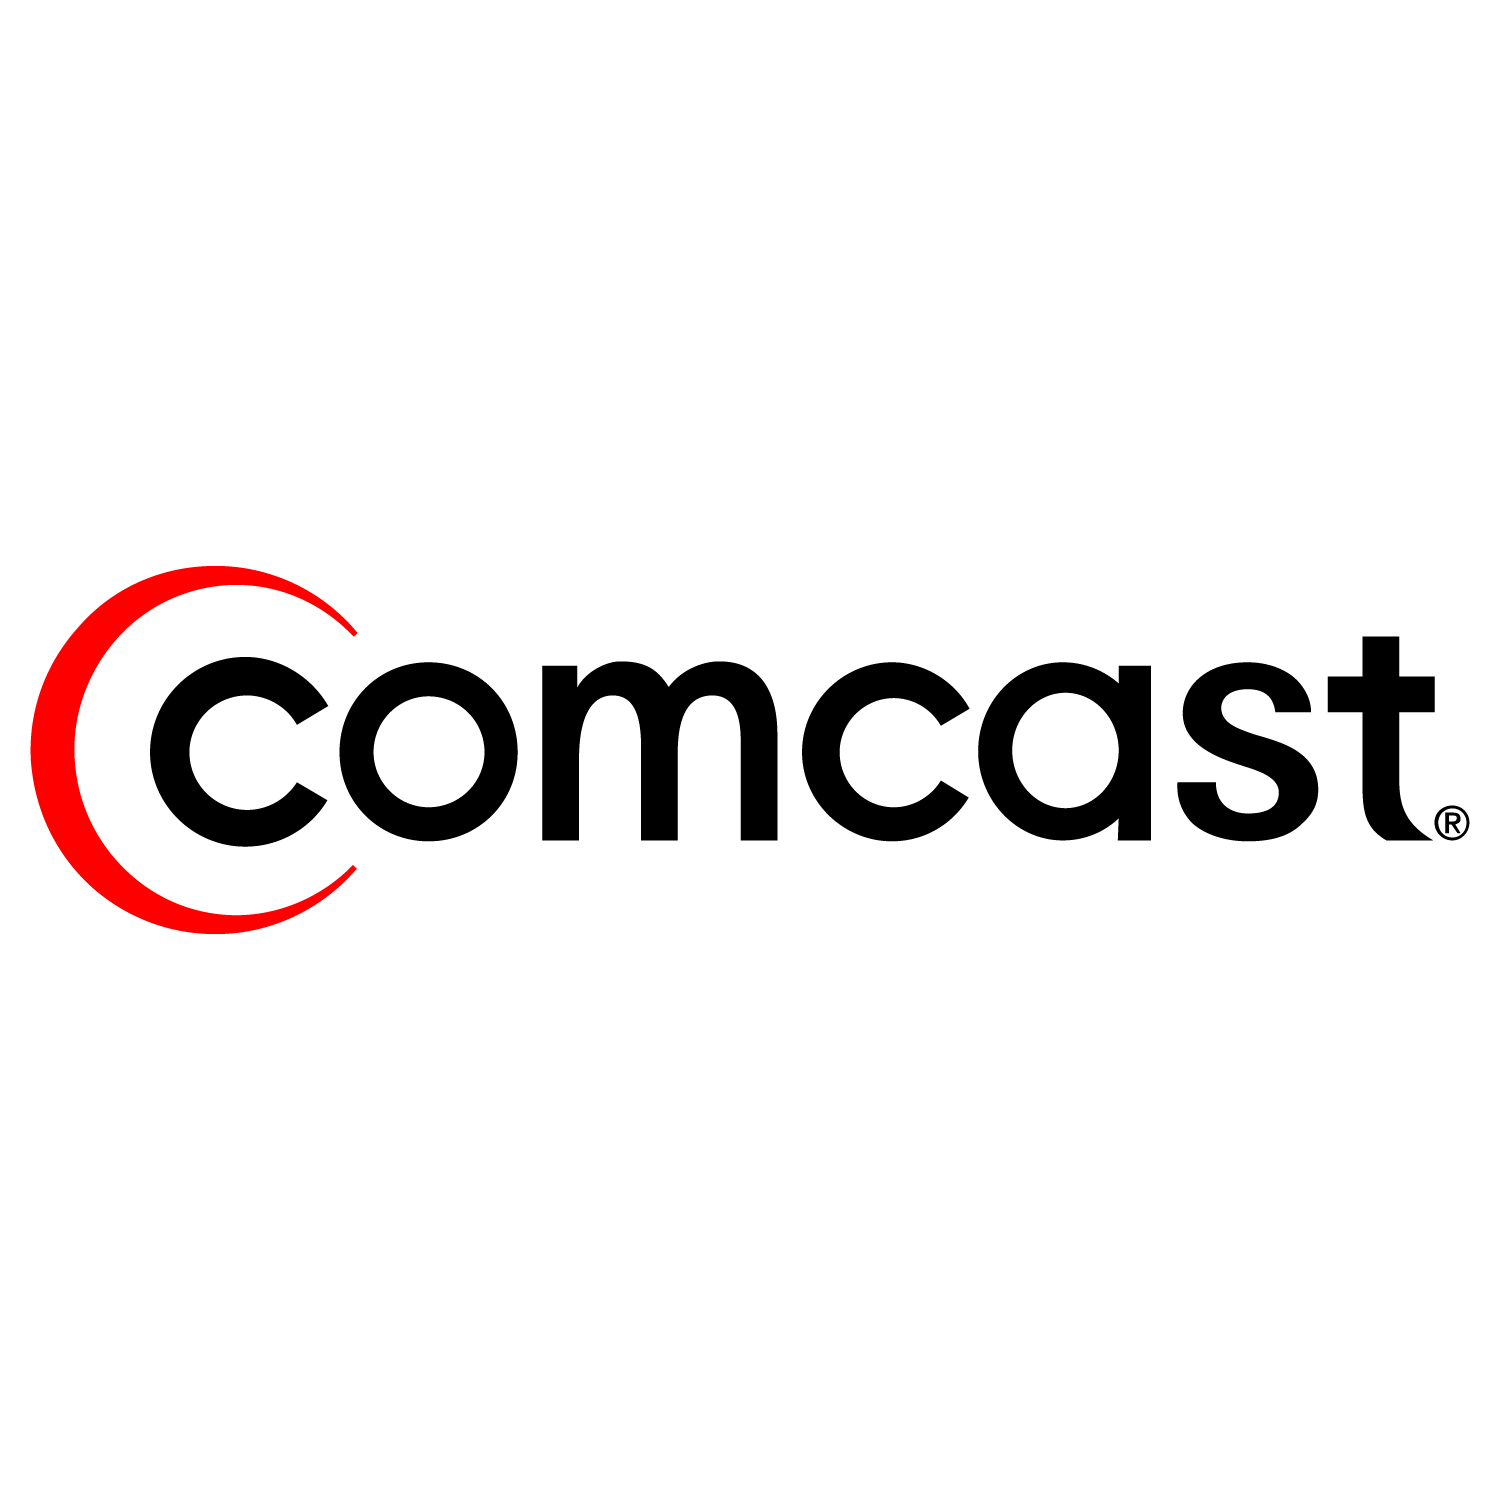 emc-logo